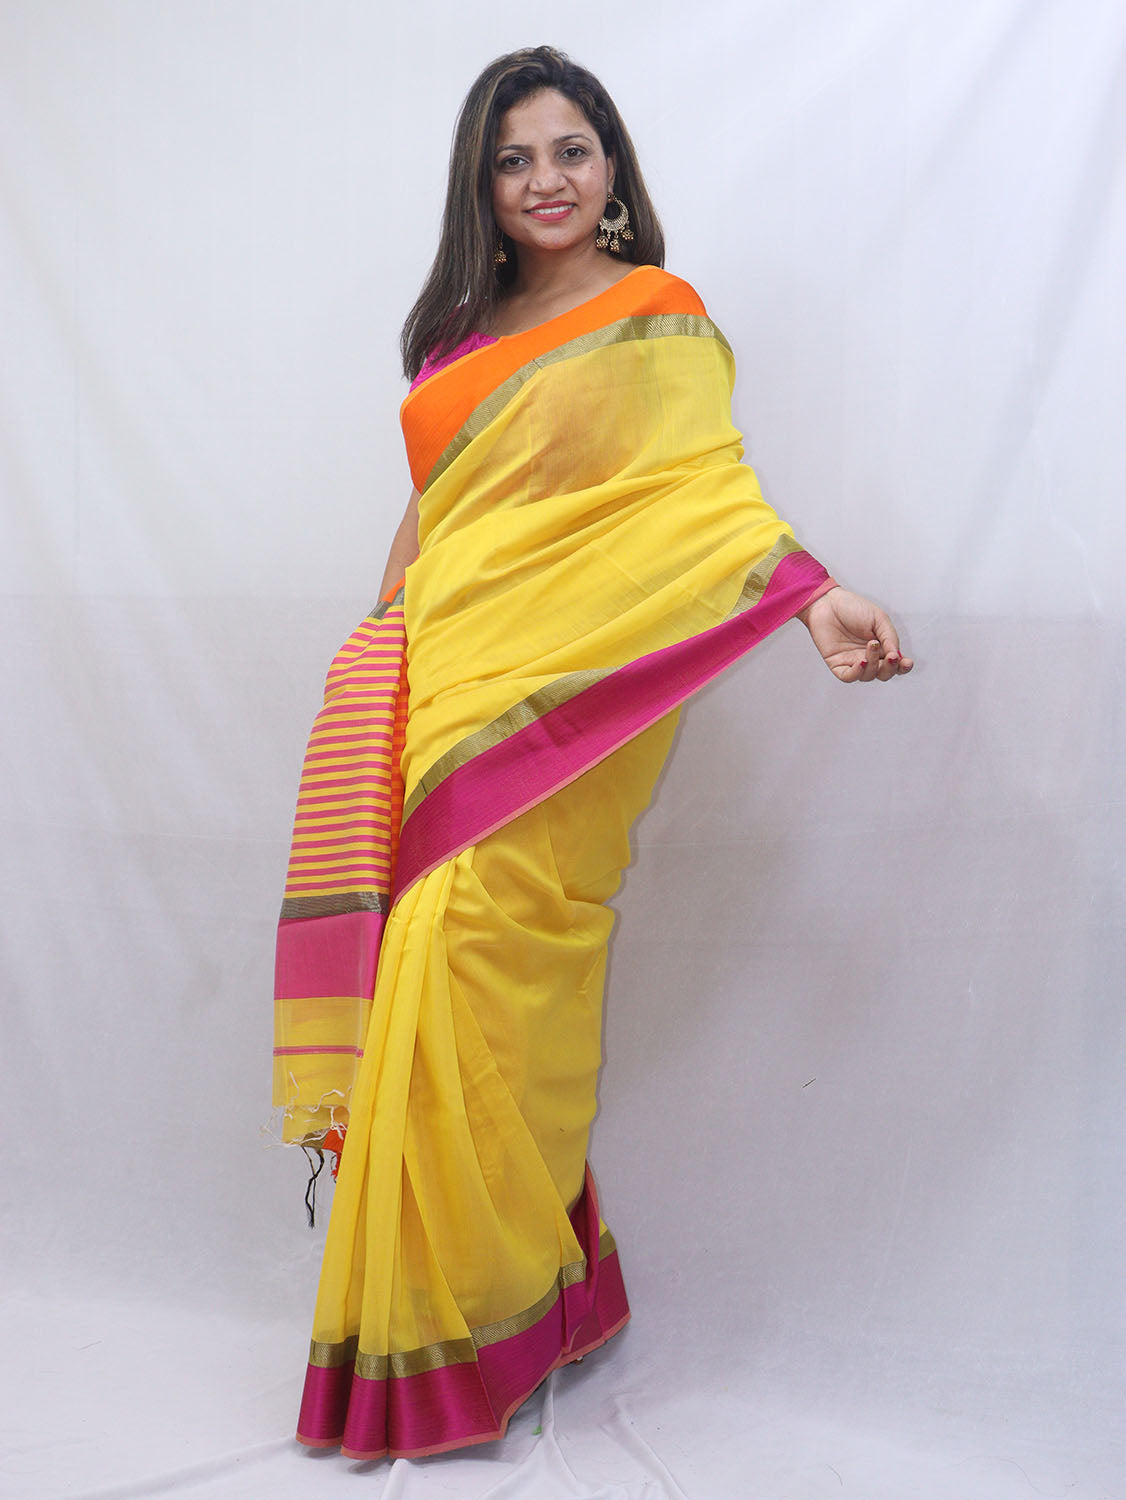 Stunning Yellow Maheshwari Silk Cotton Saree - Handloom Woven Beauty